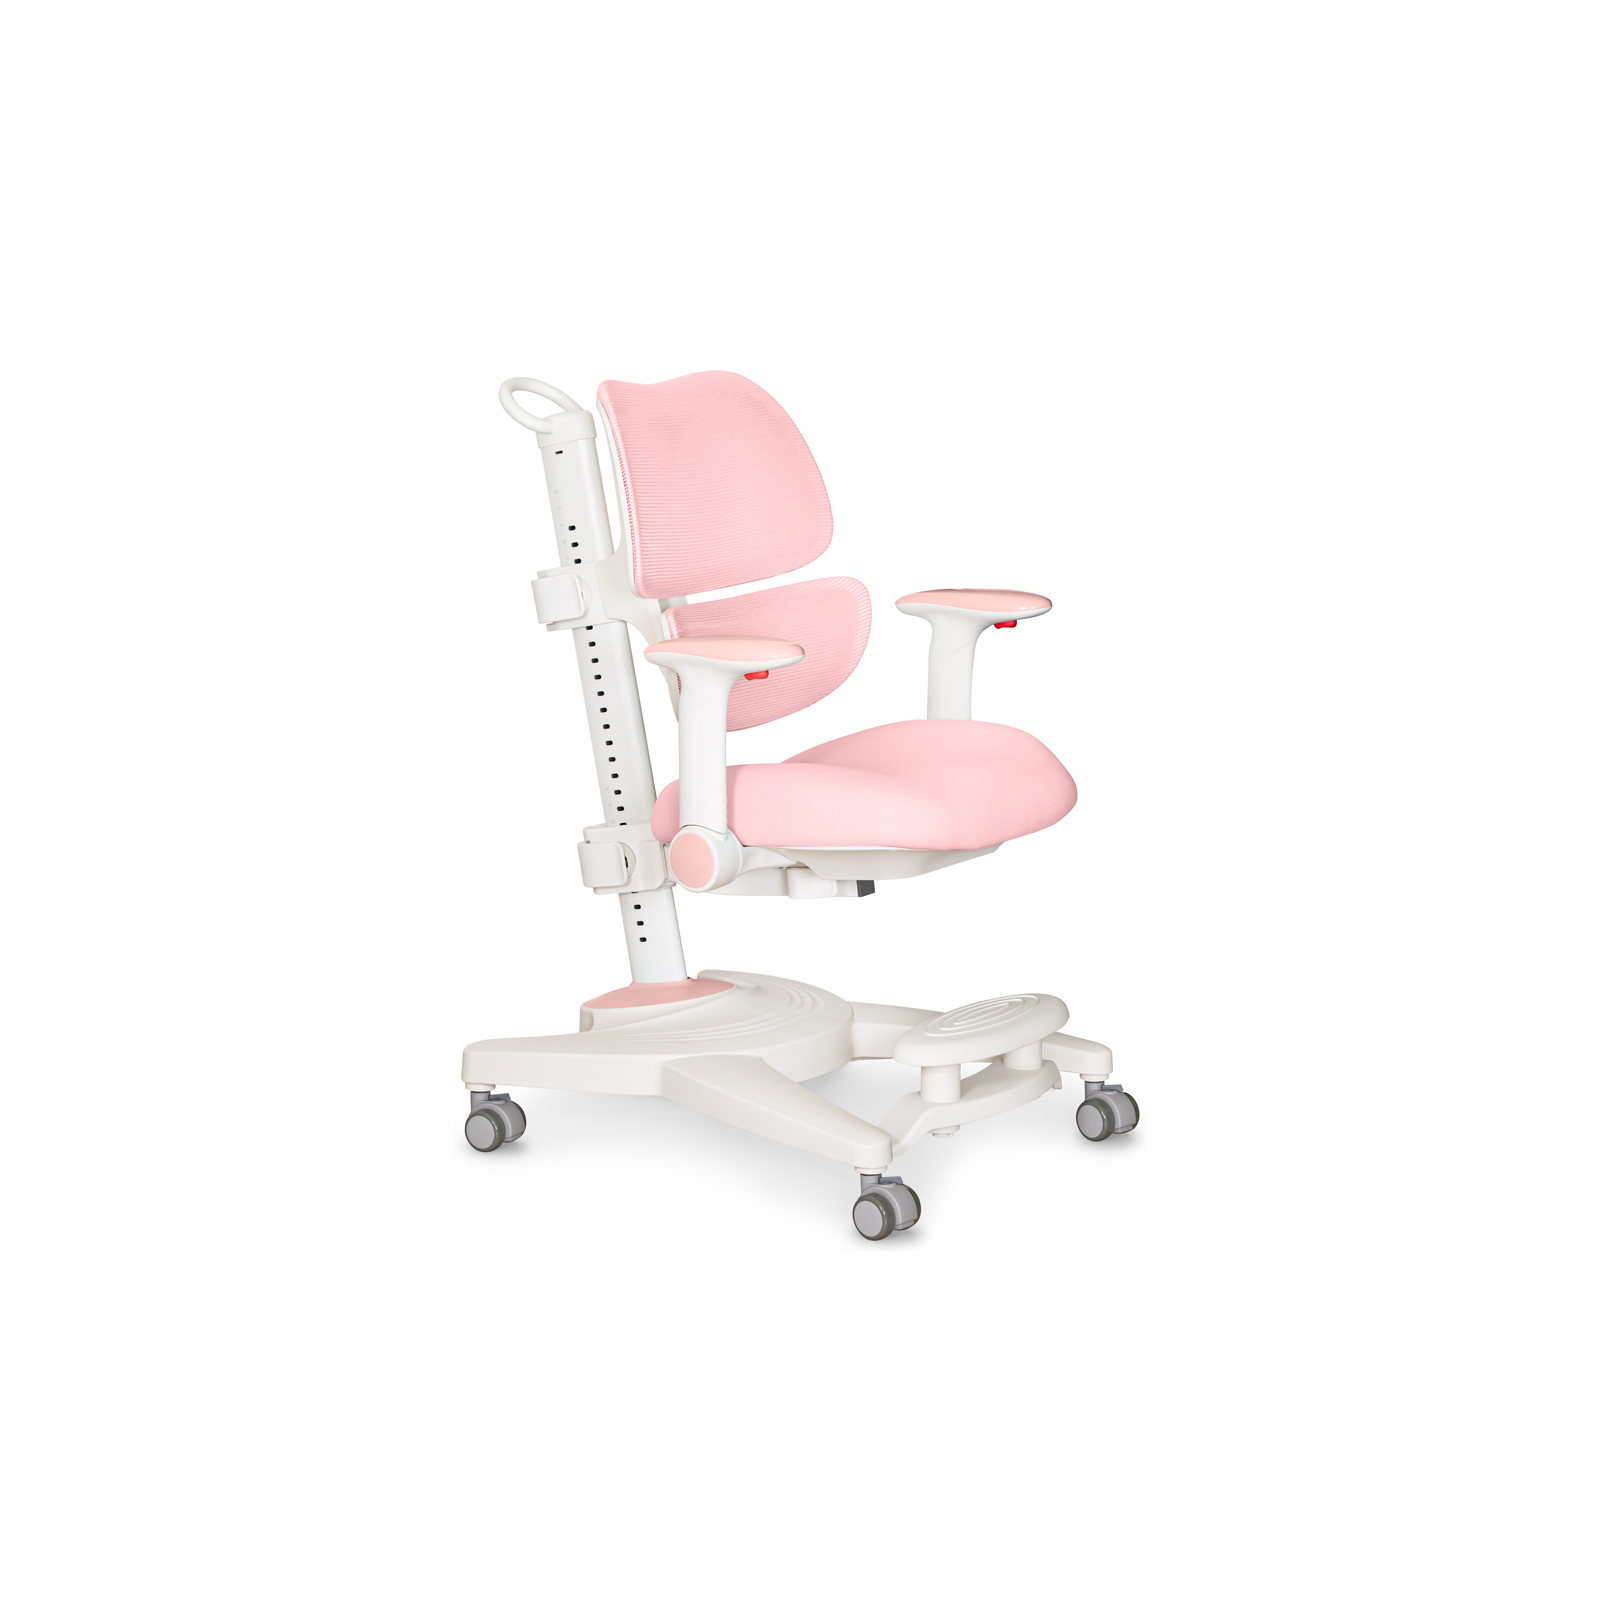 Детское кресло Mealux Space Air Pink (Y-609 KP)